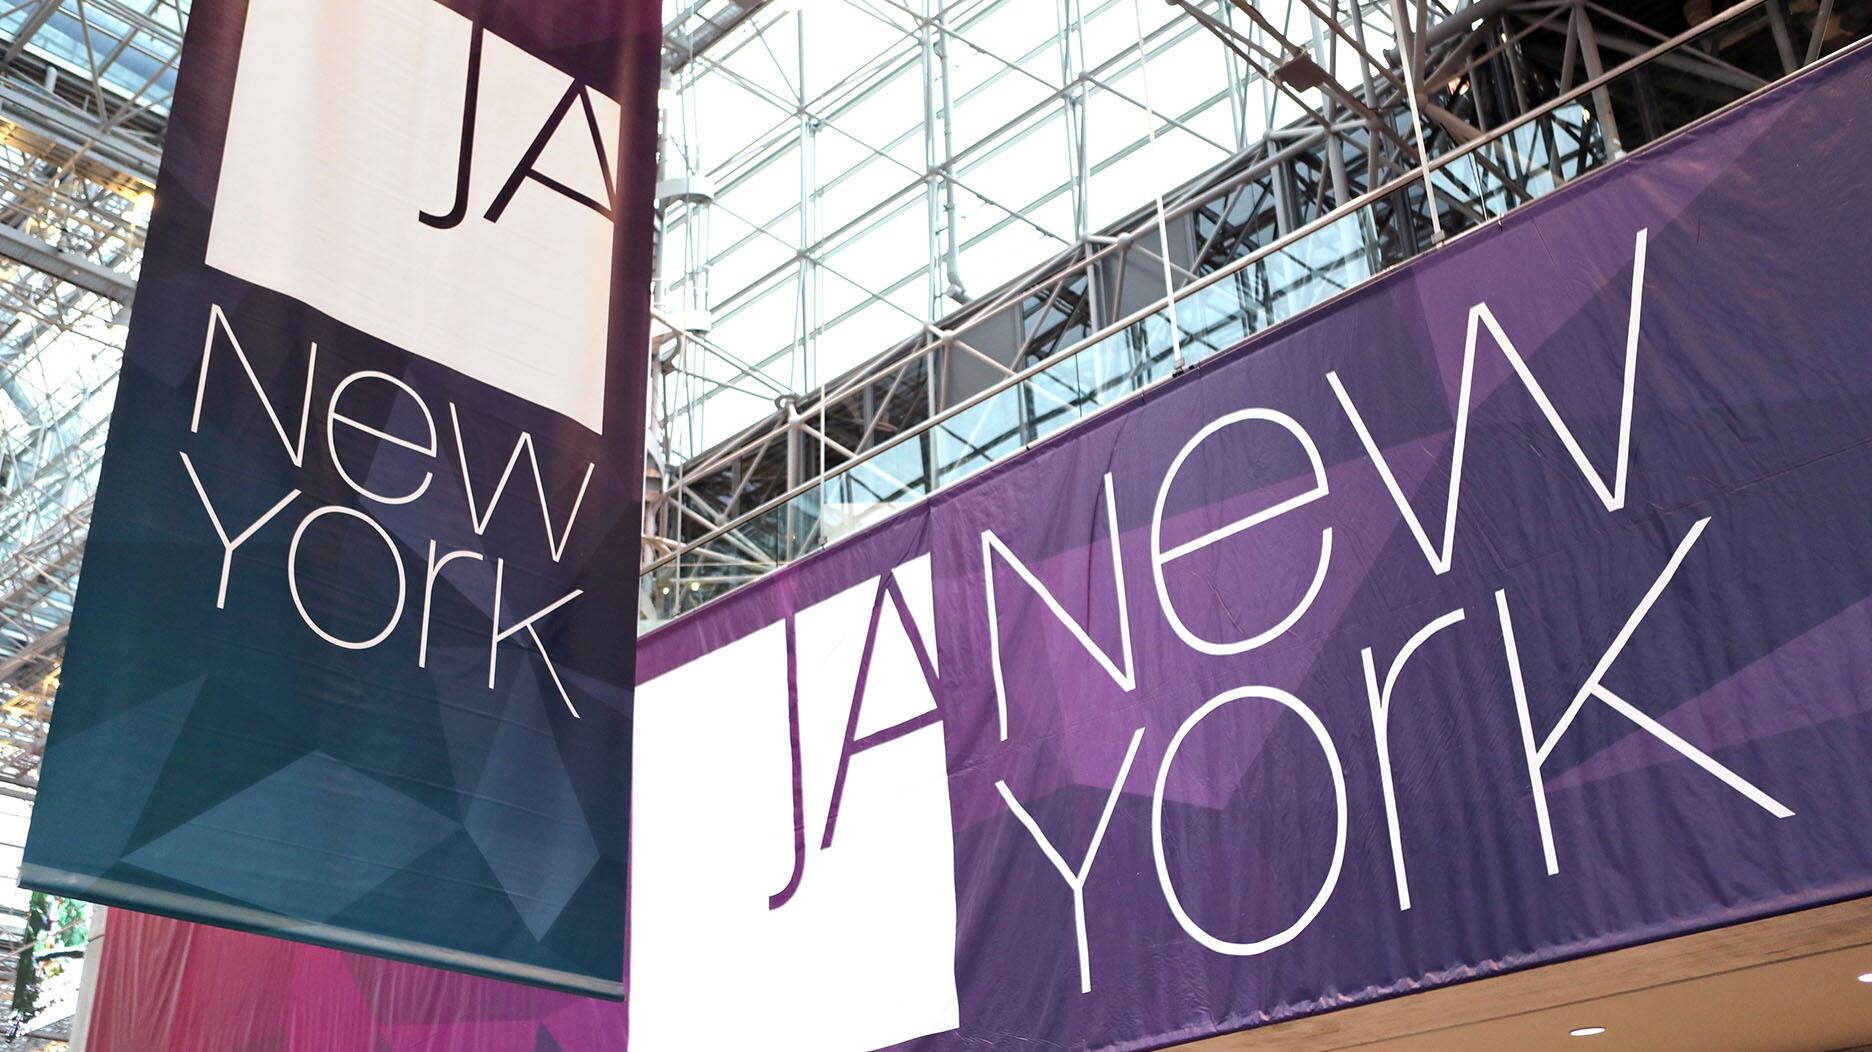 2021_JA New York signage.jpg